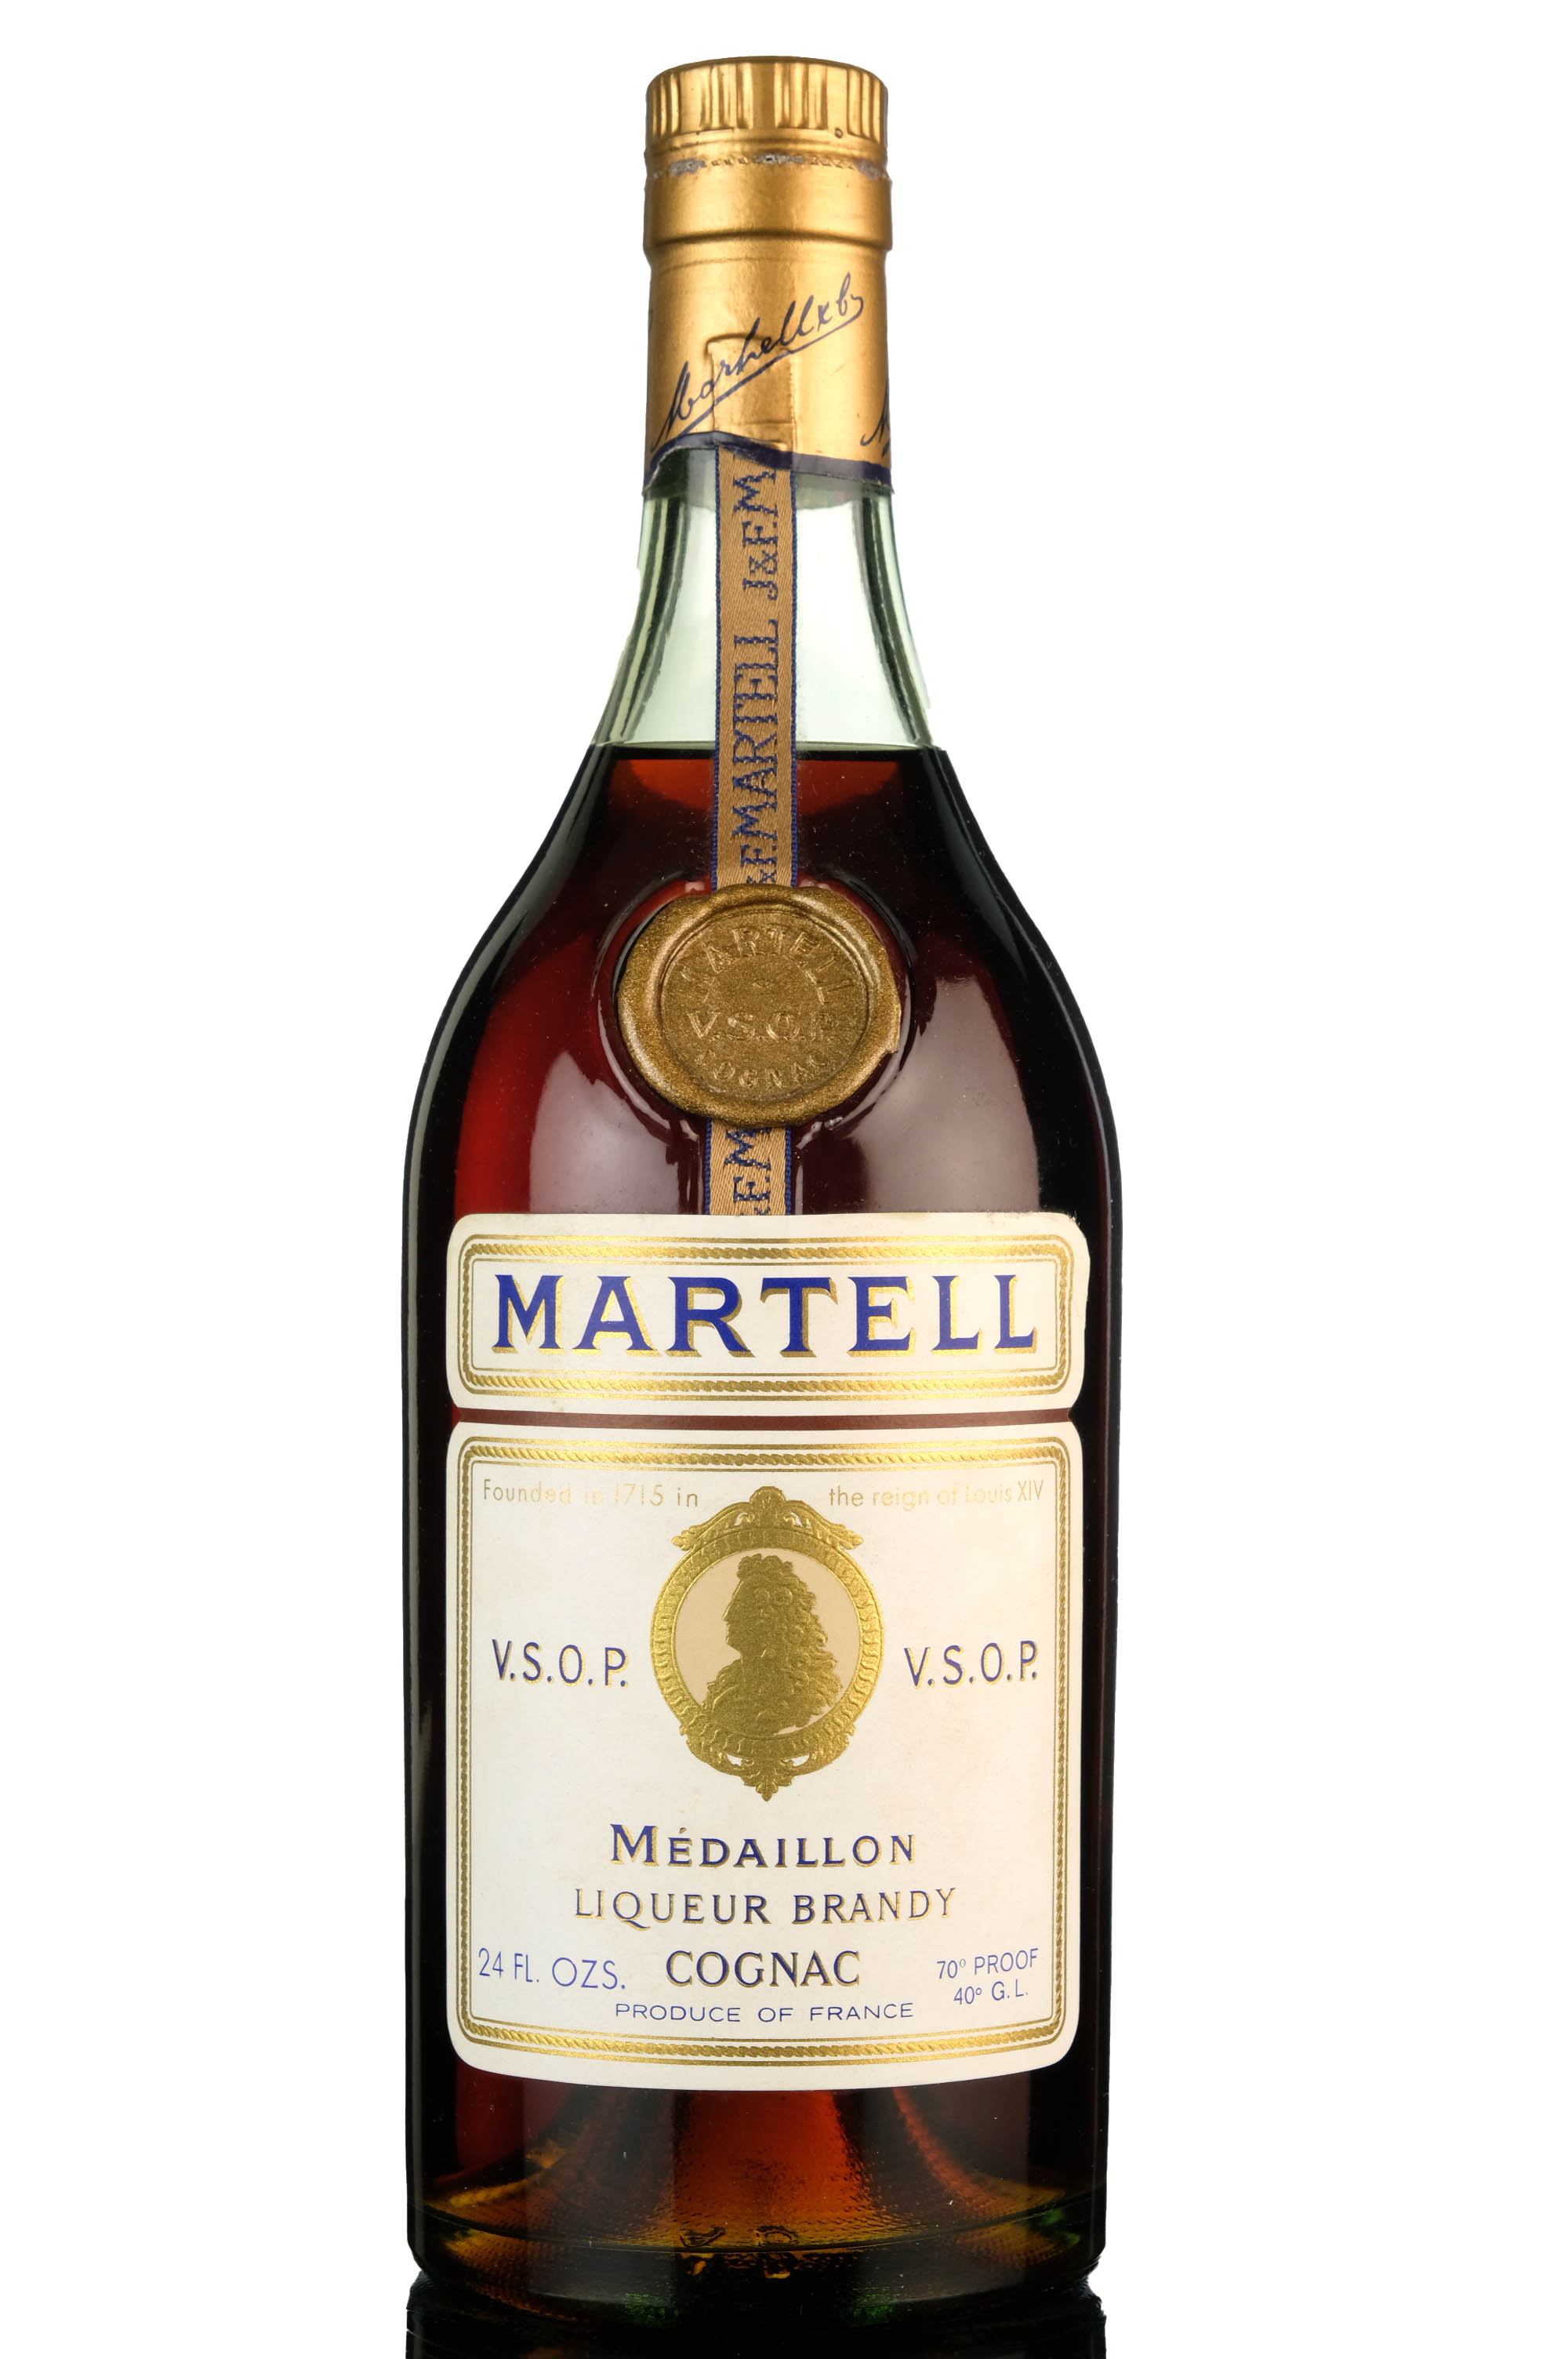 Martell VSOP Medaillon Liqueur Brandy Cognac - 1970s